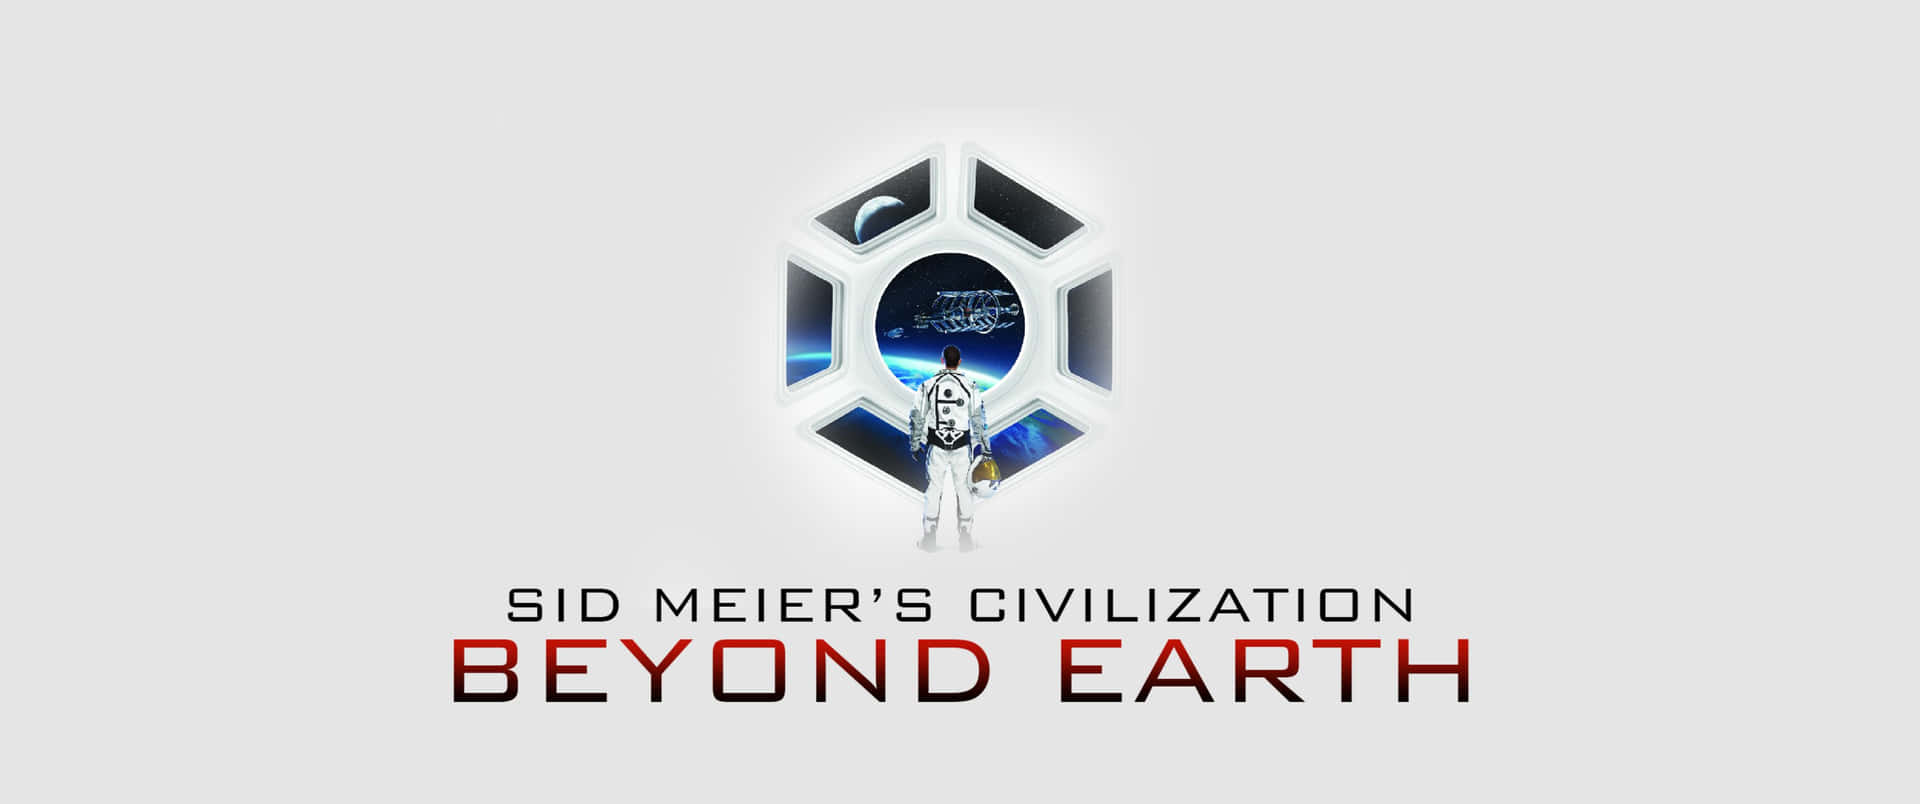 3440x1440pcivilization Beyond Earth Bakgrundsbild Med Logotyp.